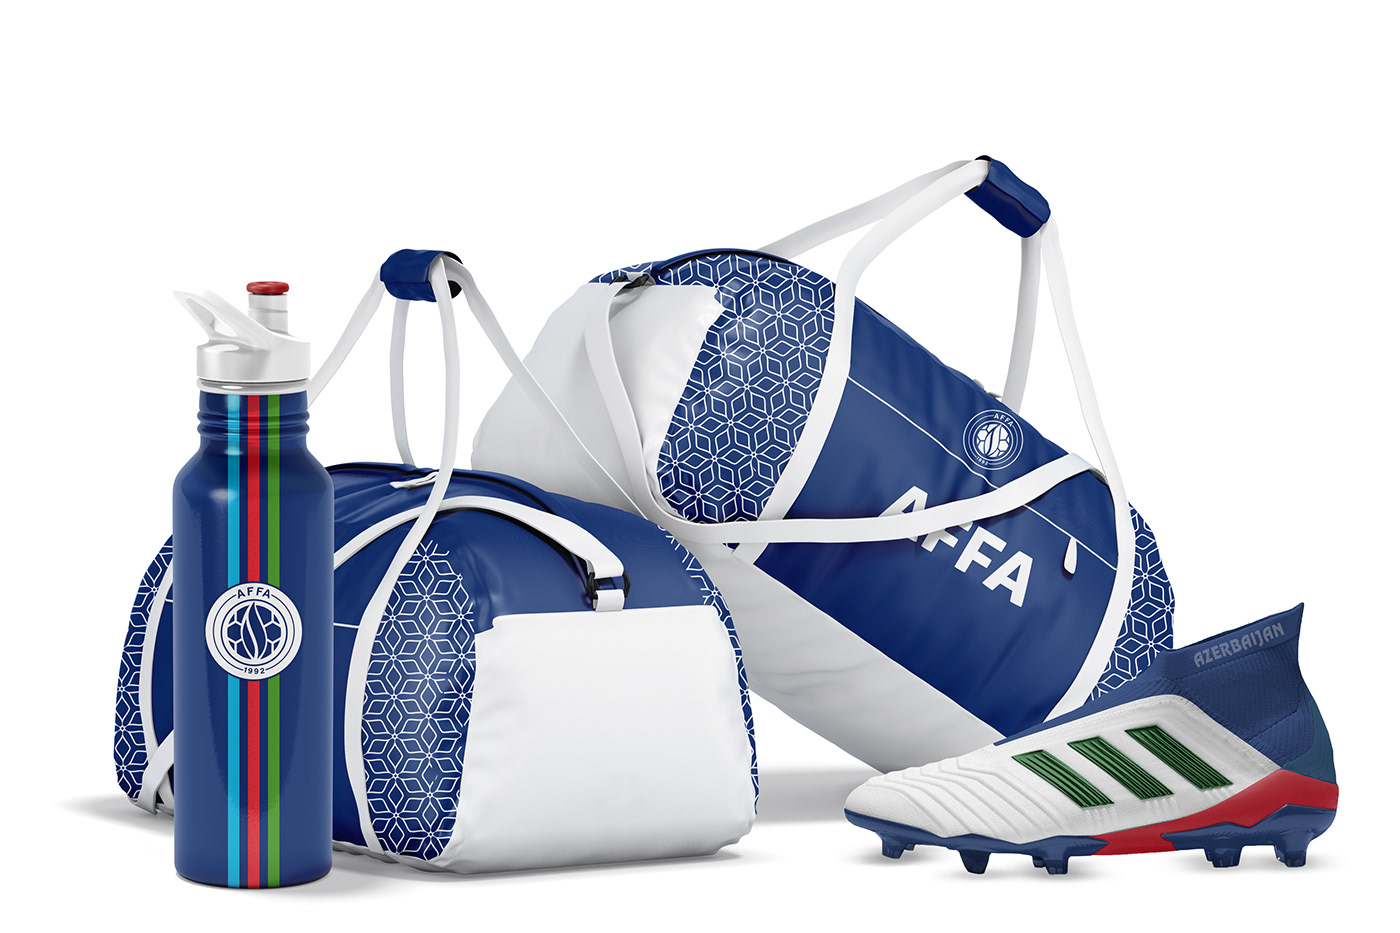 adidas AFFA azerbaijan baku brand identity football logo modern redesign soccerbrand